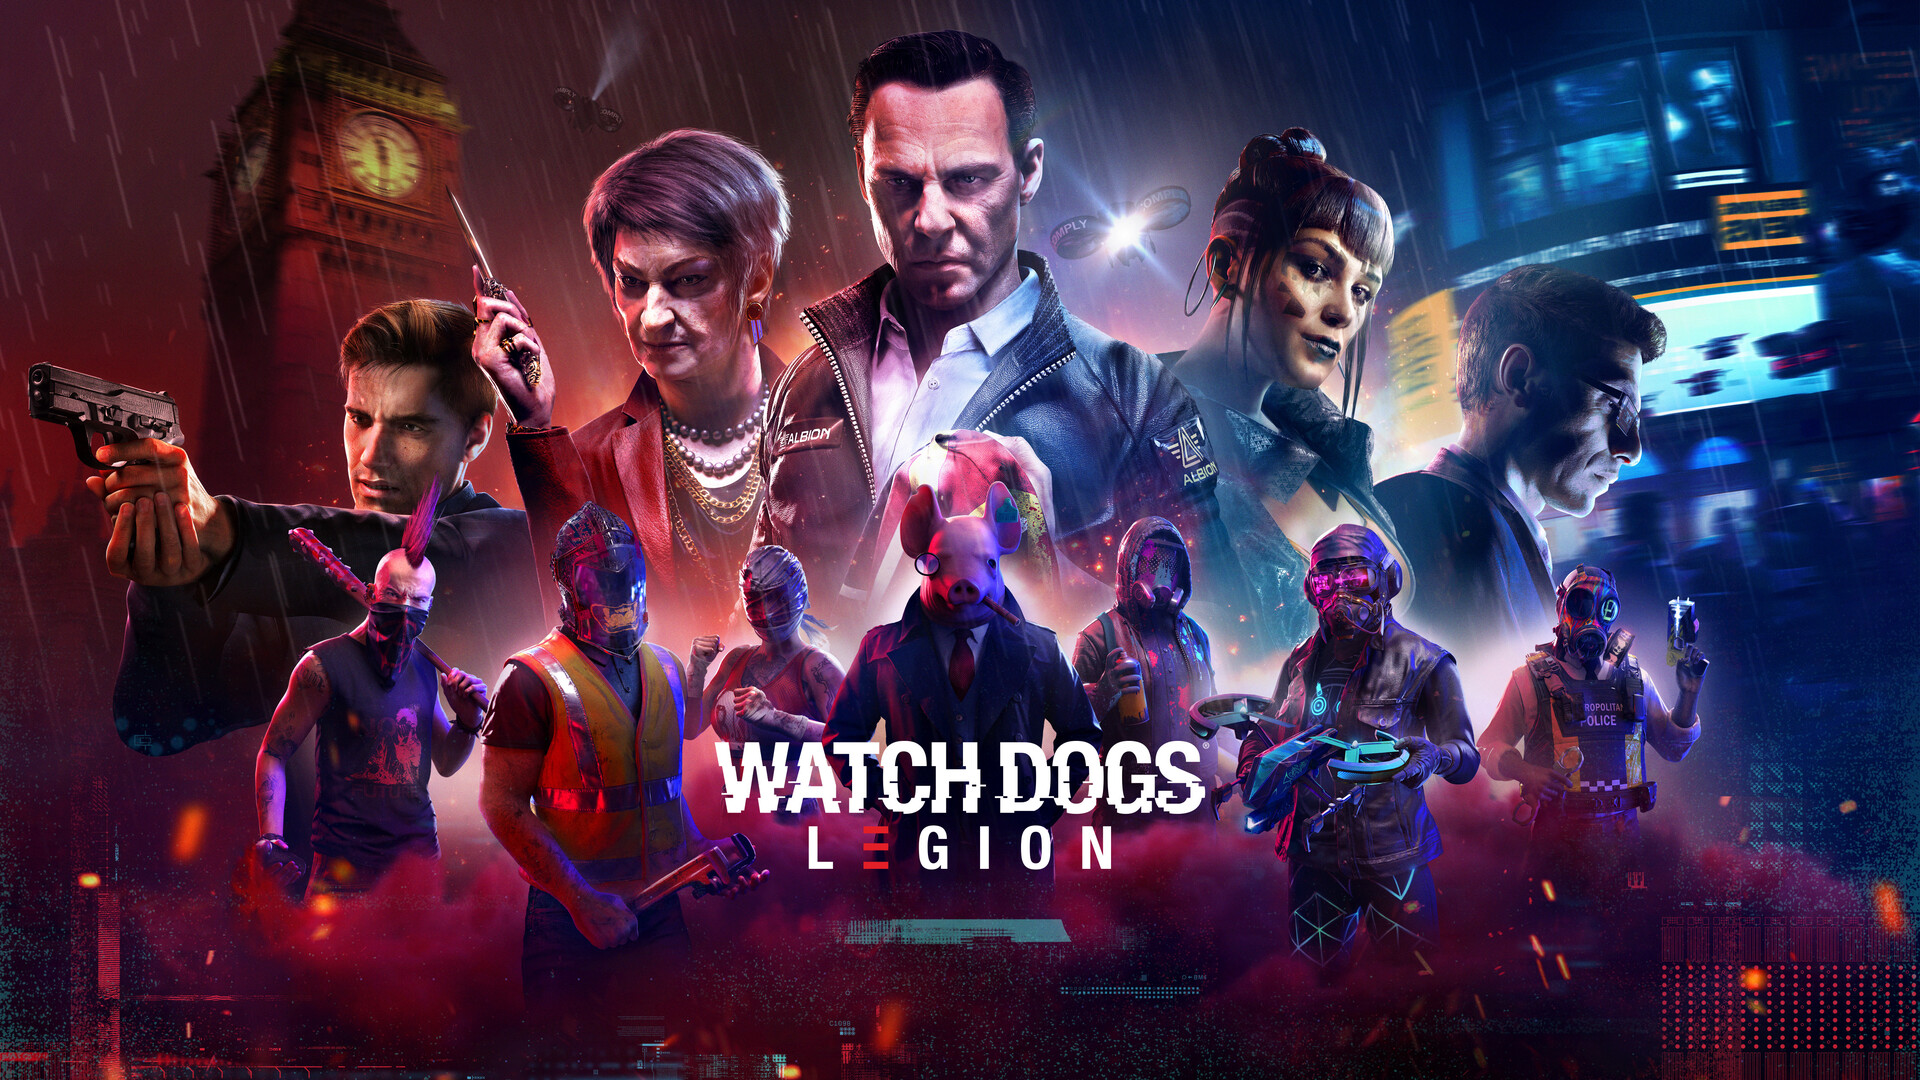 Image: Watch Dogs: Legion